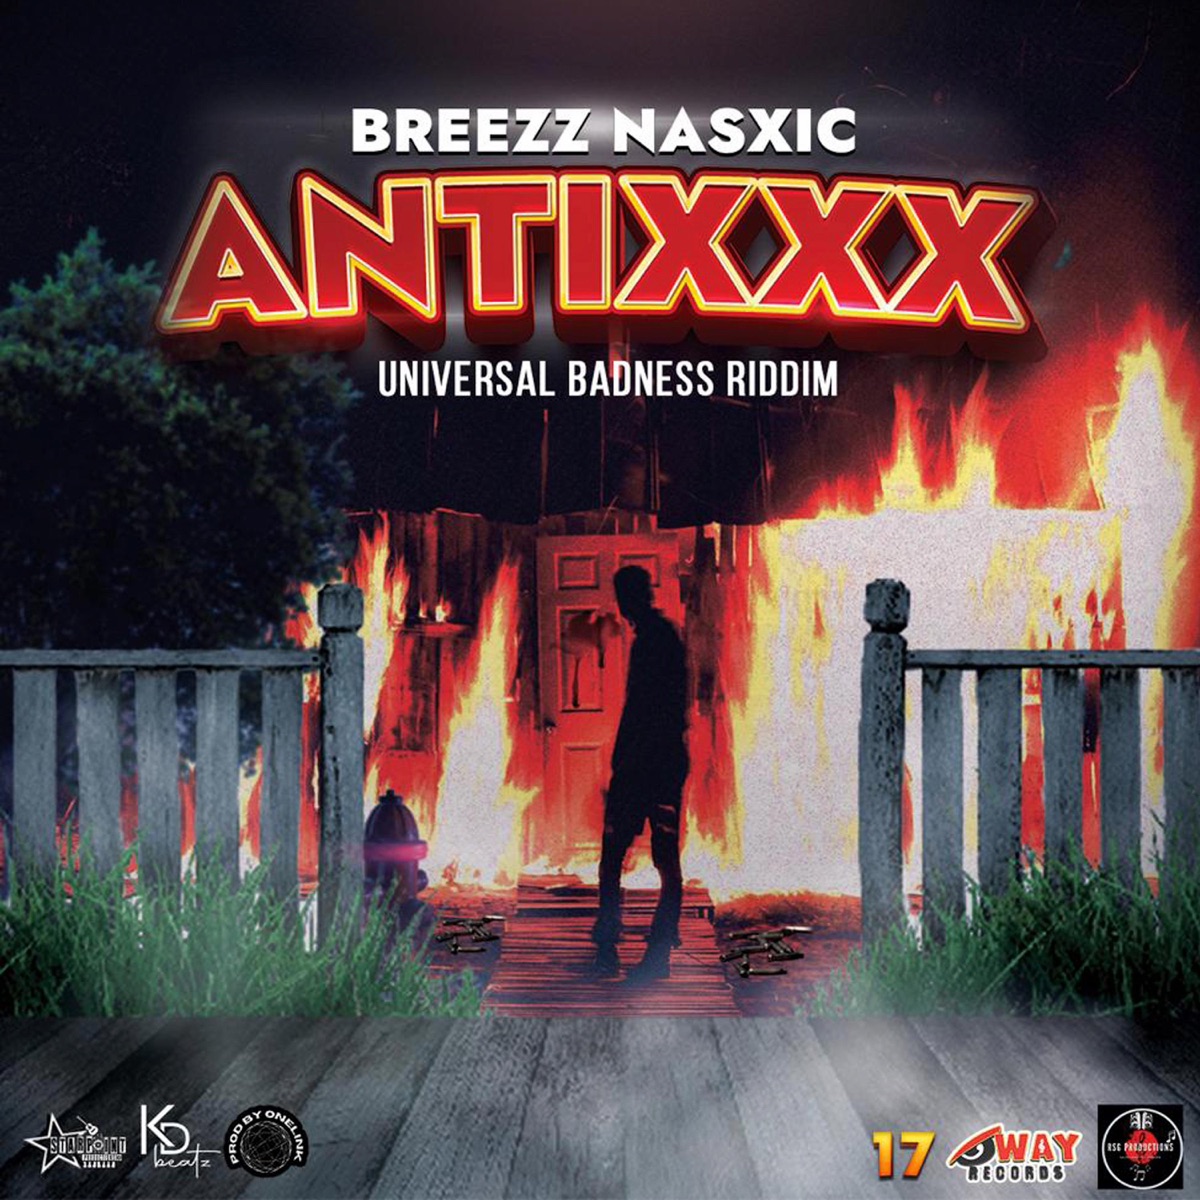 Antixxx (feat. Breezz Nasxic) - Single - Album by RSG Productions - Apple  Music